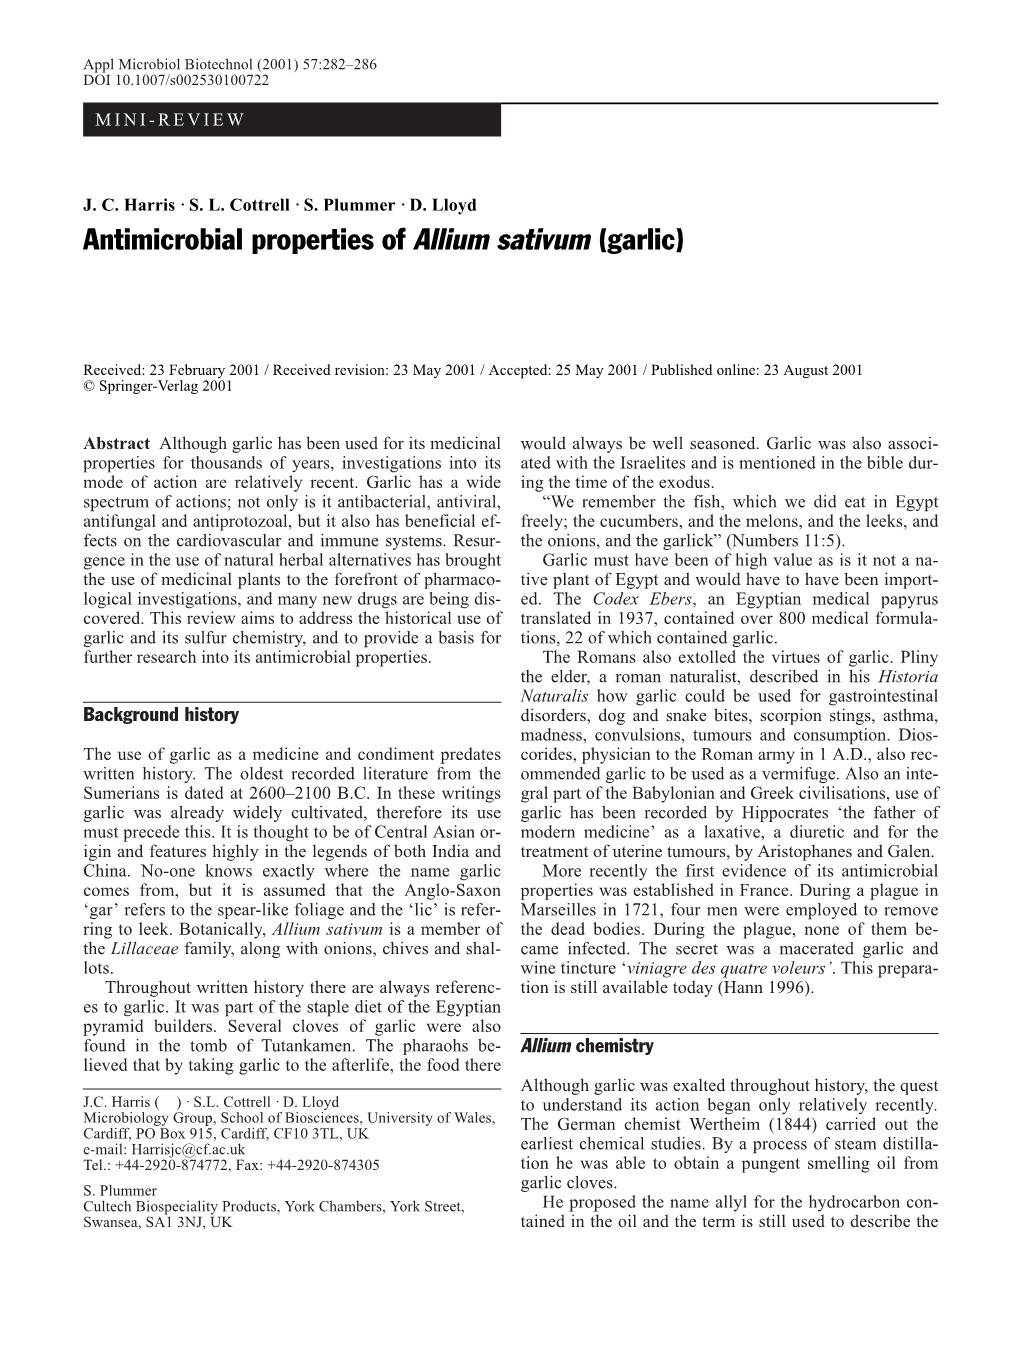 Antimicrobial Properties of Allium Sativum (Garlic)